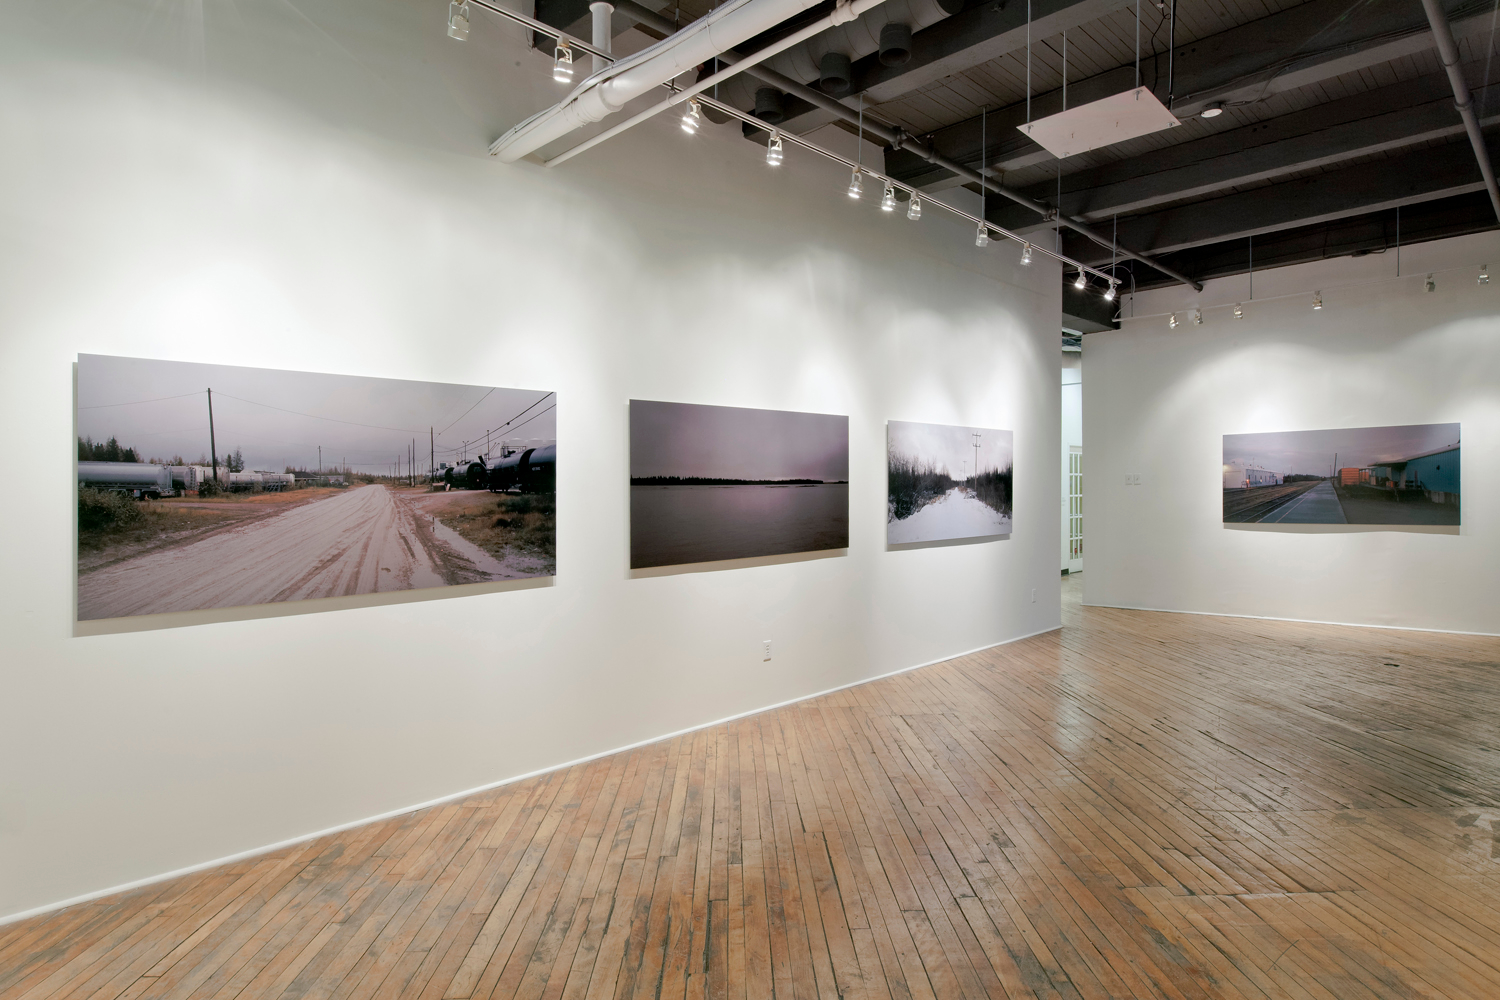     Installation view of Jesse Louttit, No Roads, 2012

